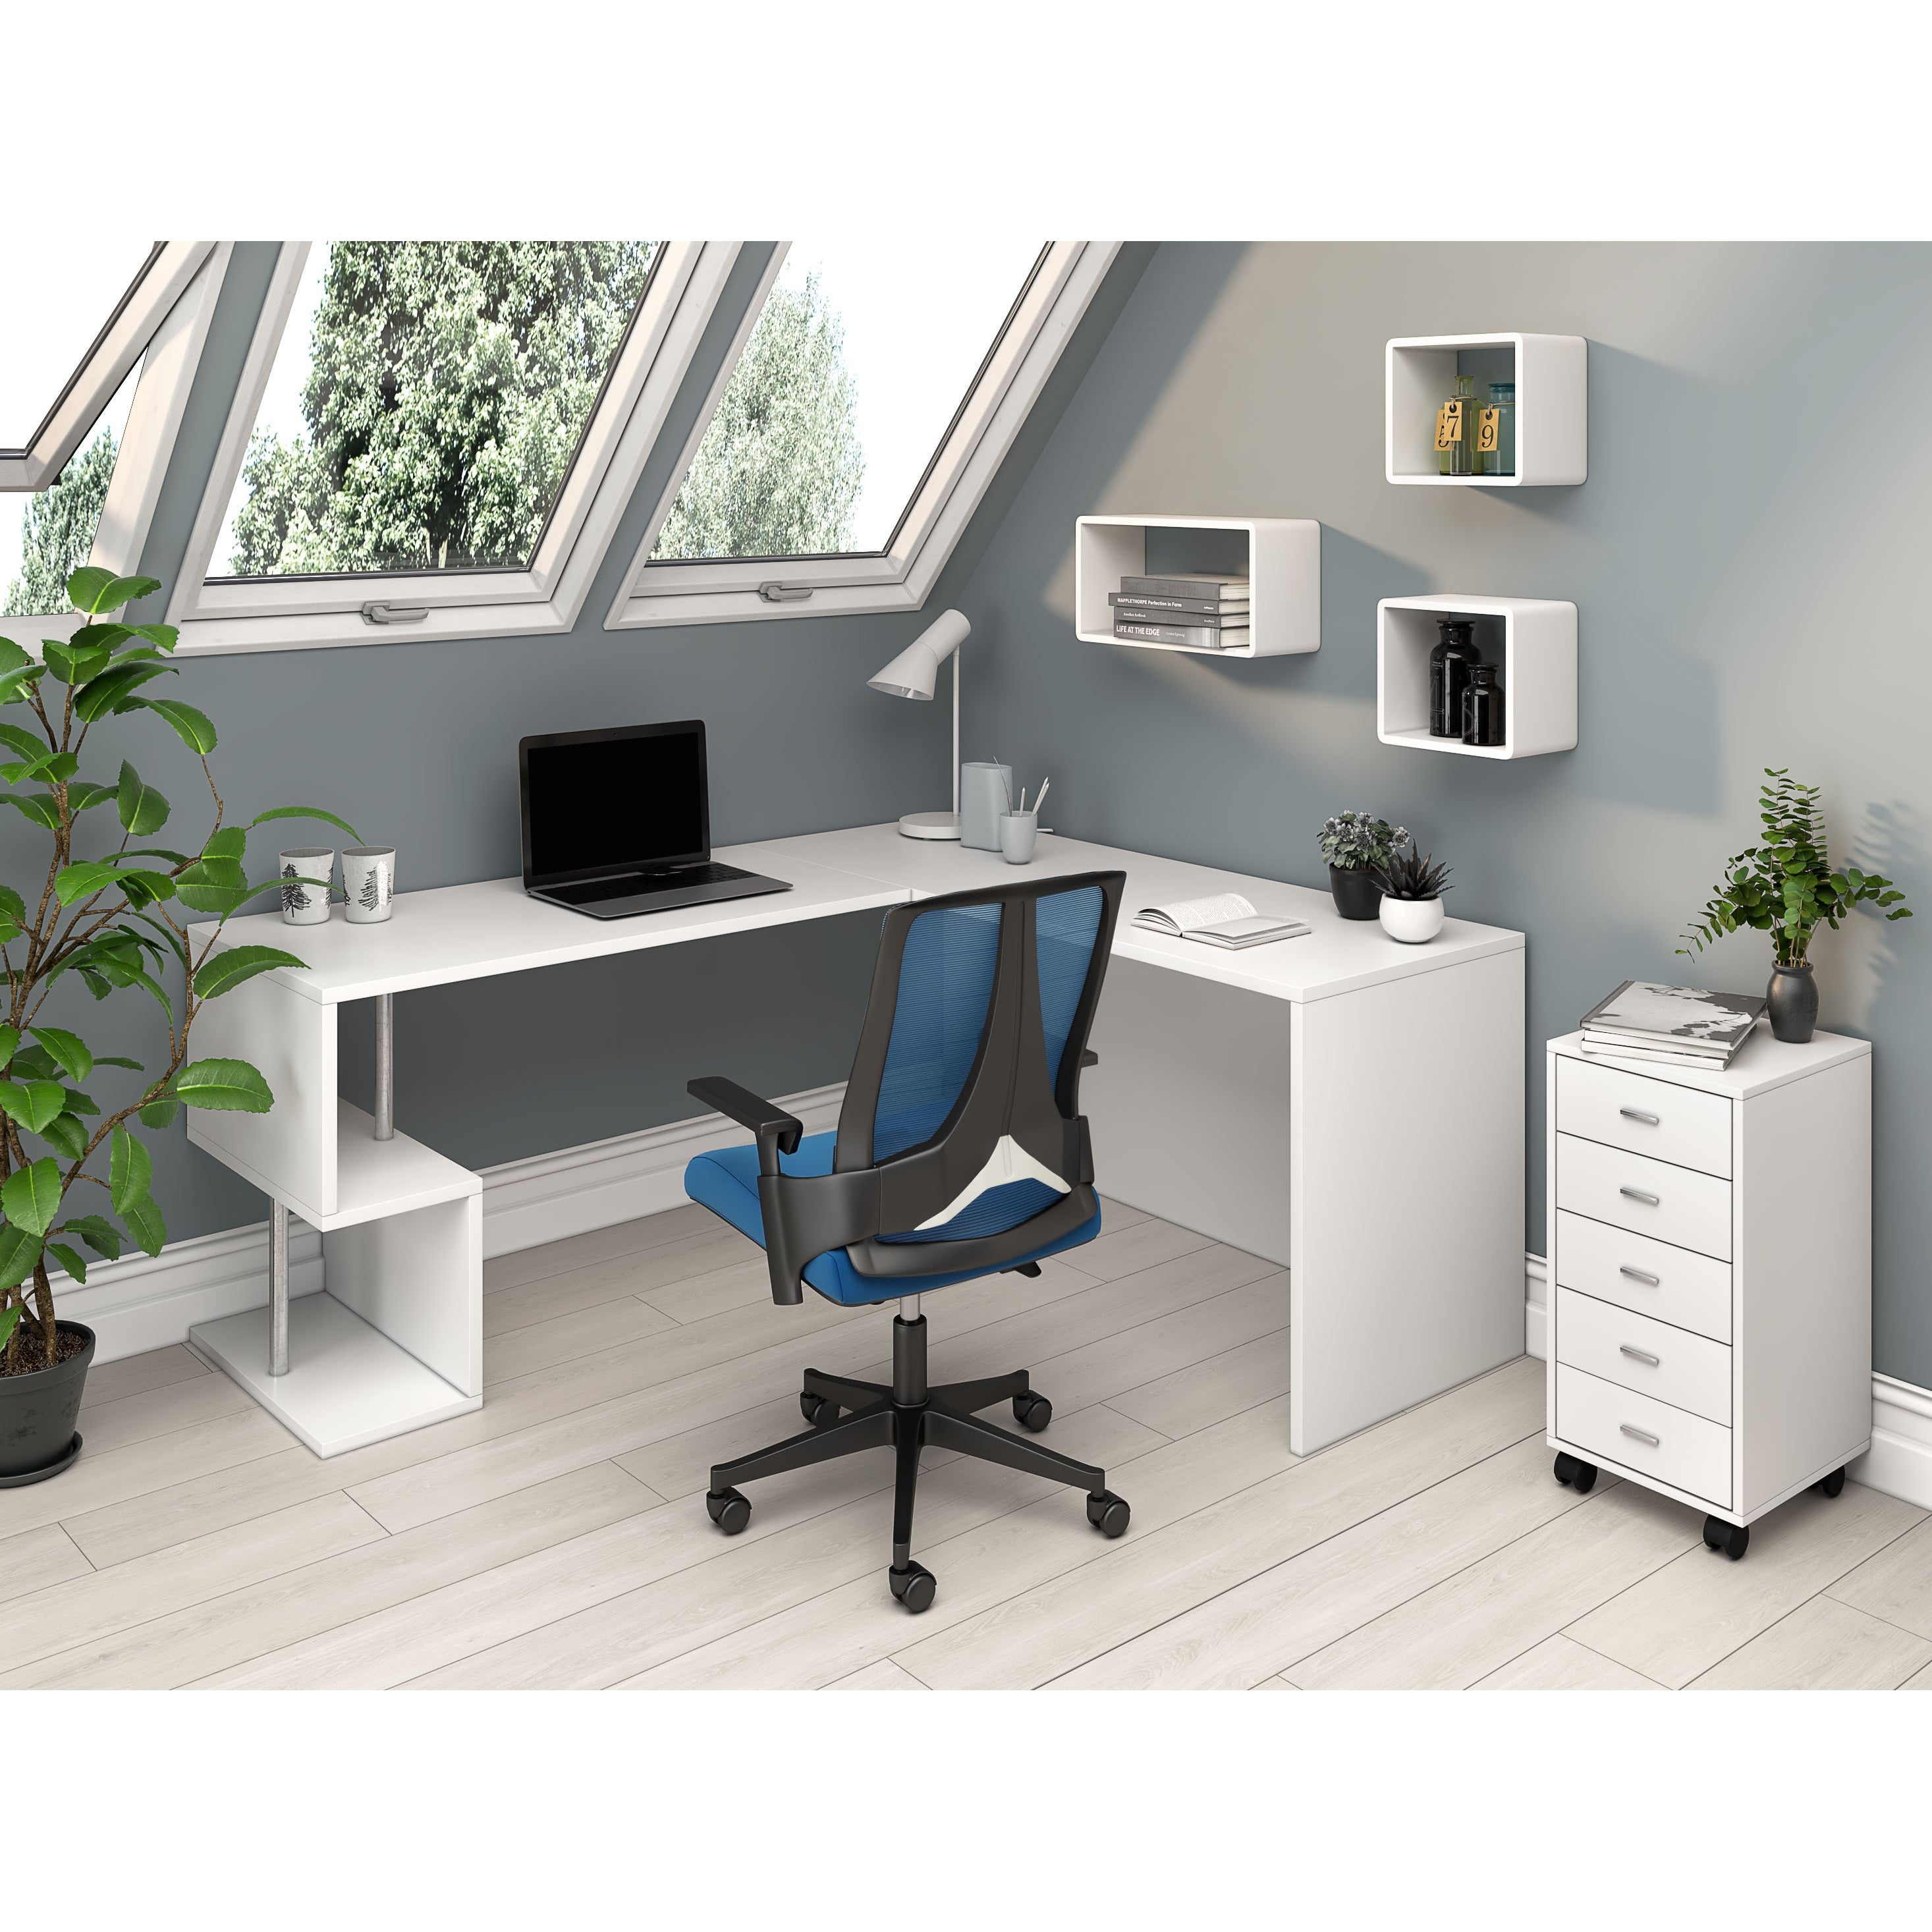 Nancy's Seymour Office Chair - Office Chair - Tiltable Backrest - Ergonomic - Mesh - Blue - Black - 63 x 69 x 102-112 cm